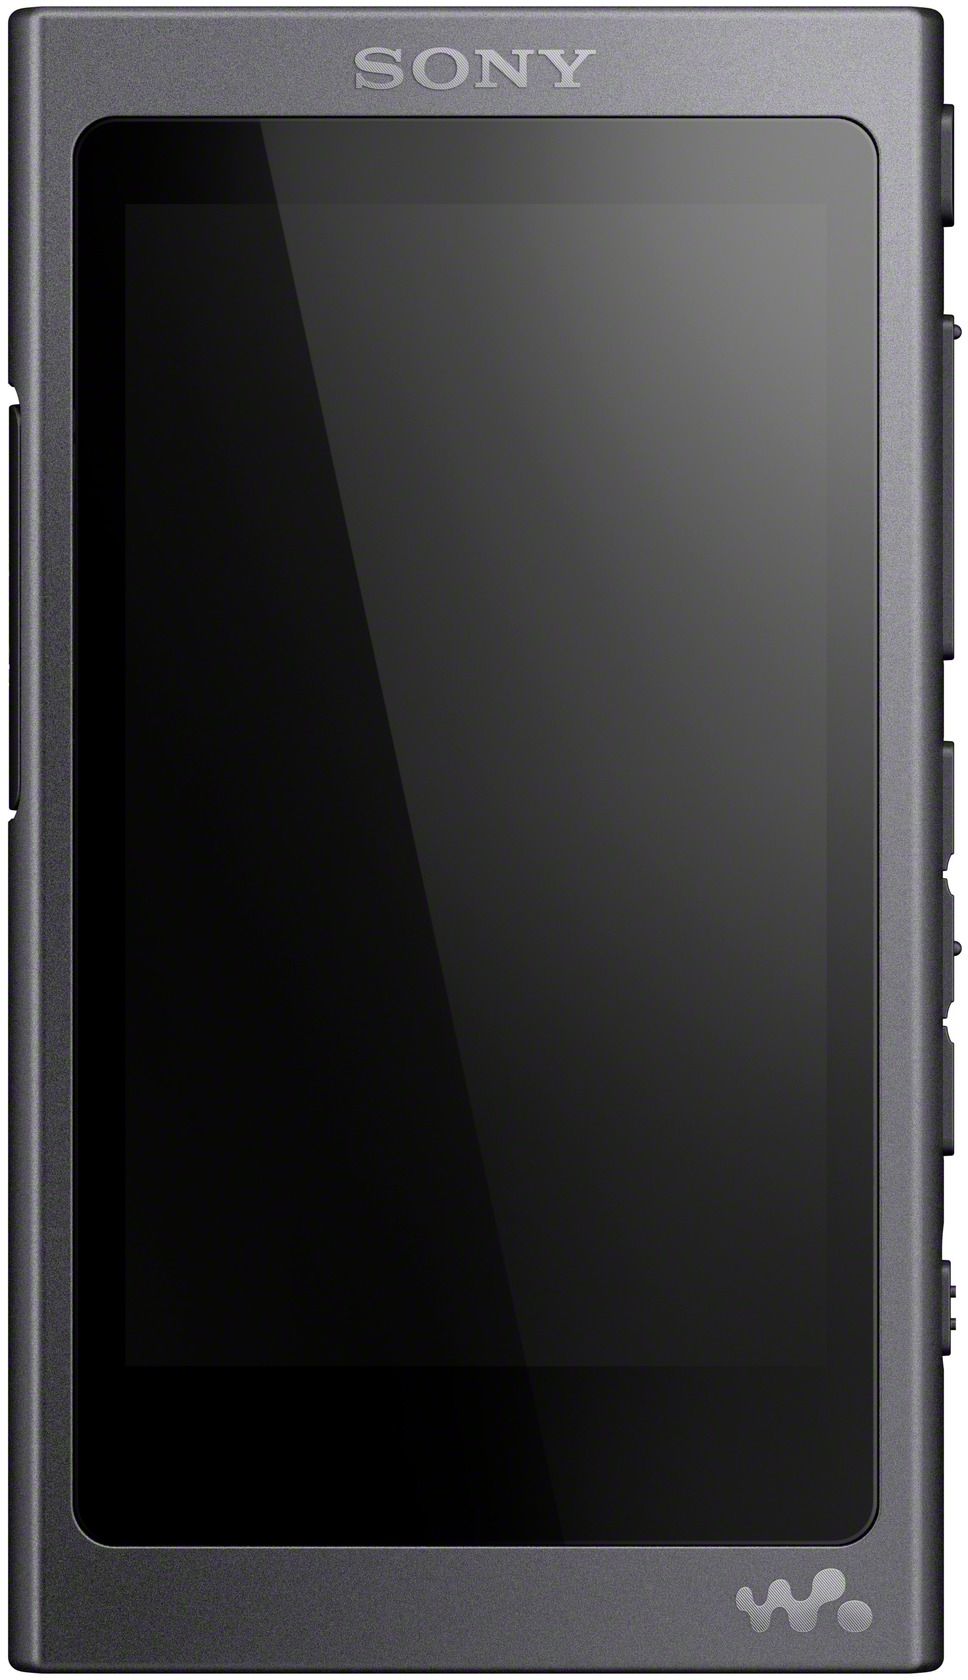 Sony® NW-A40 Series 16GB Grayish Black Walkman® MP3 Player